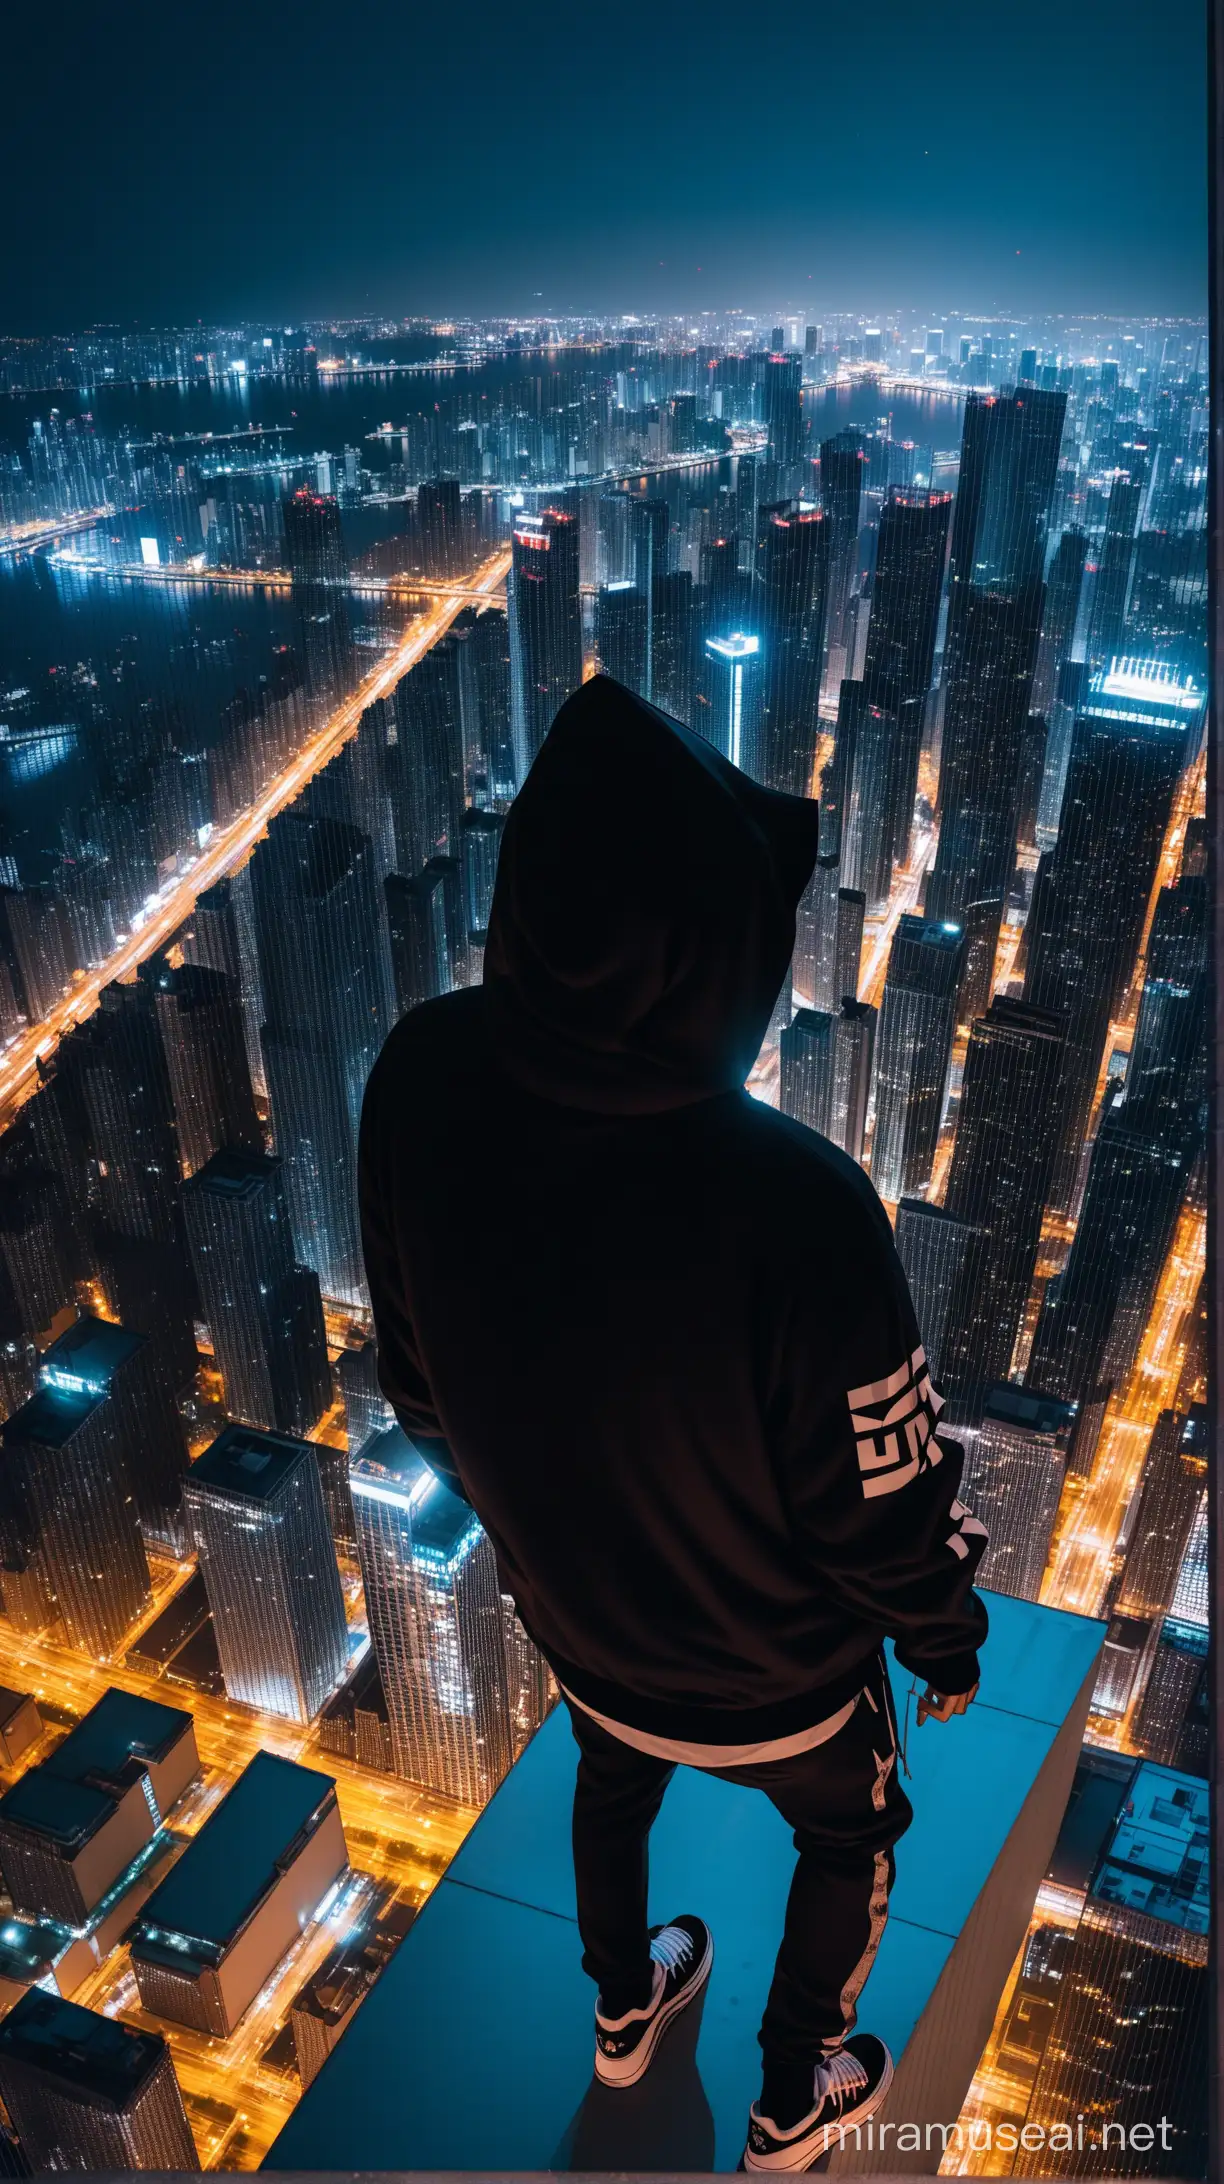 Urban Explorer in Streetwear Capturing Nighttime Cityscape